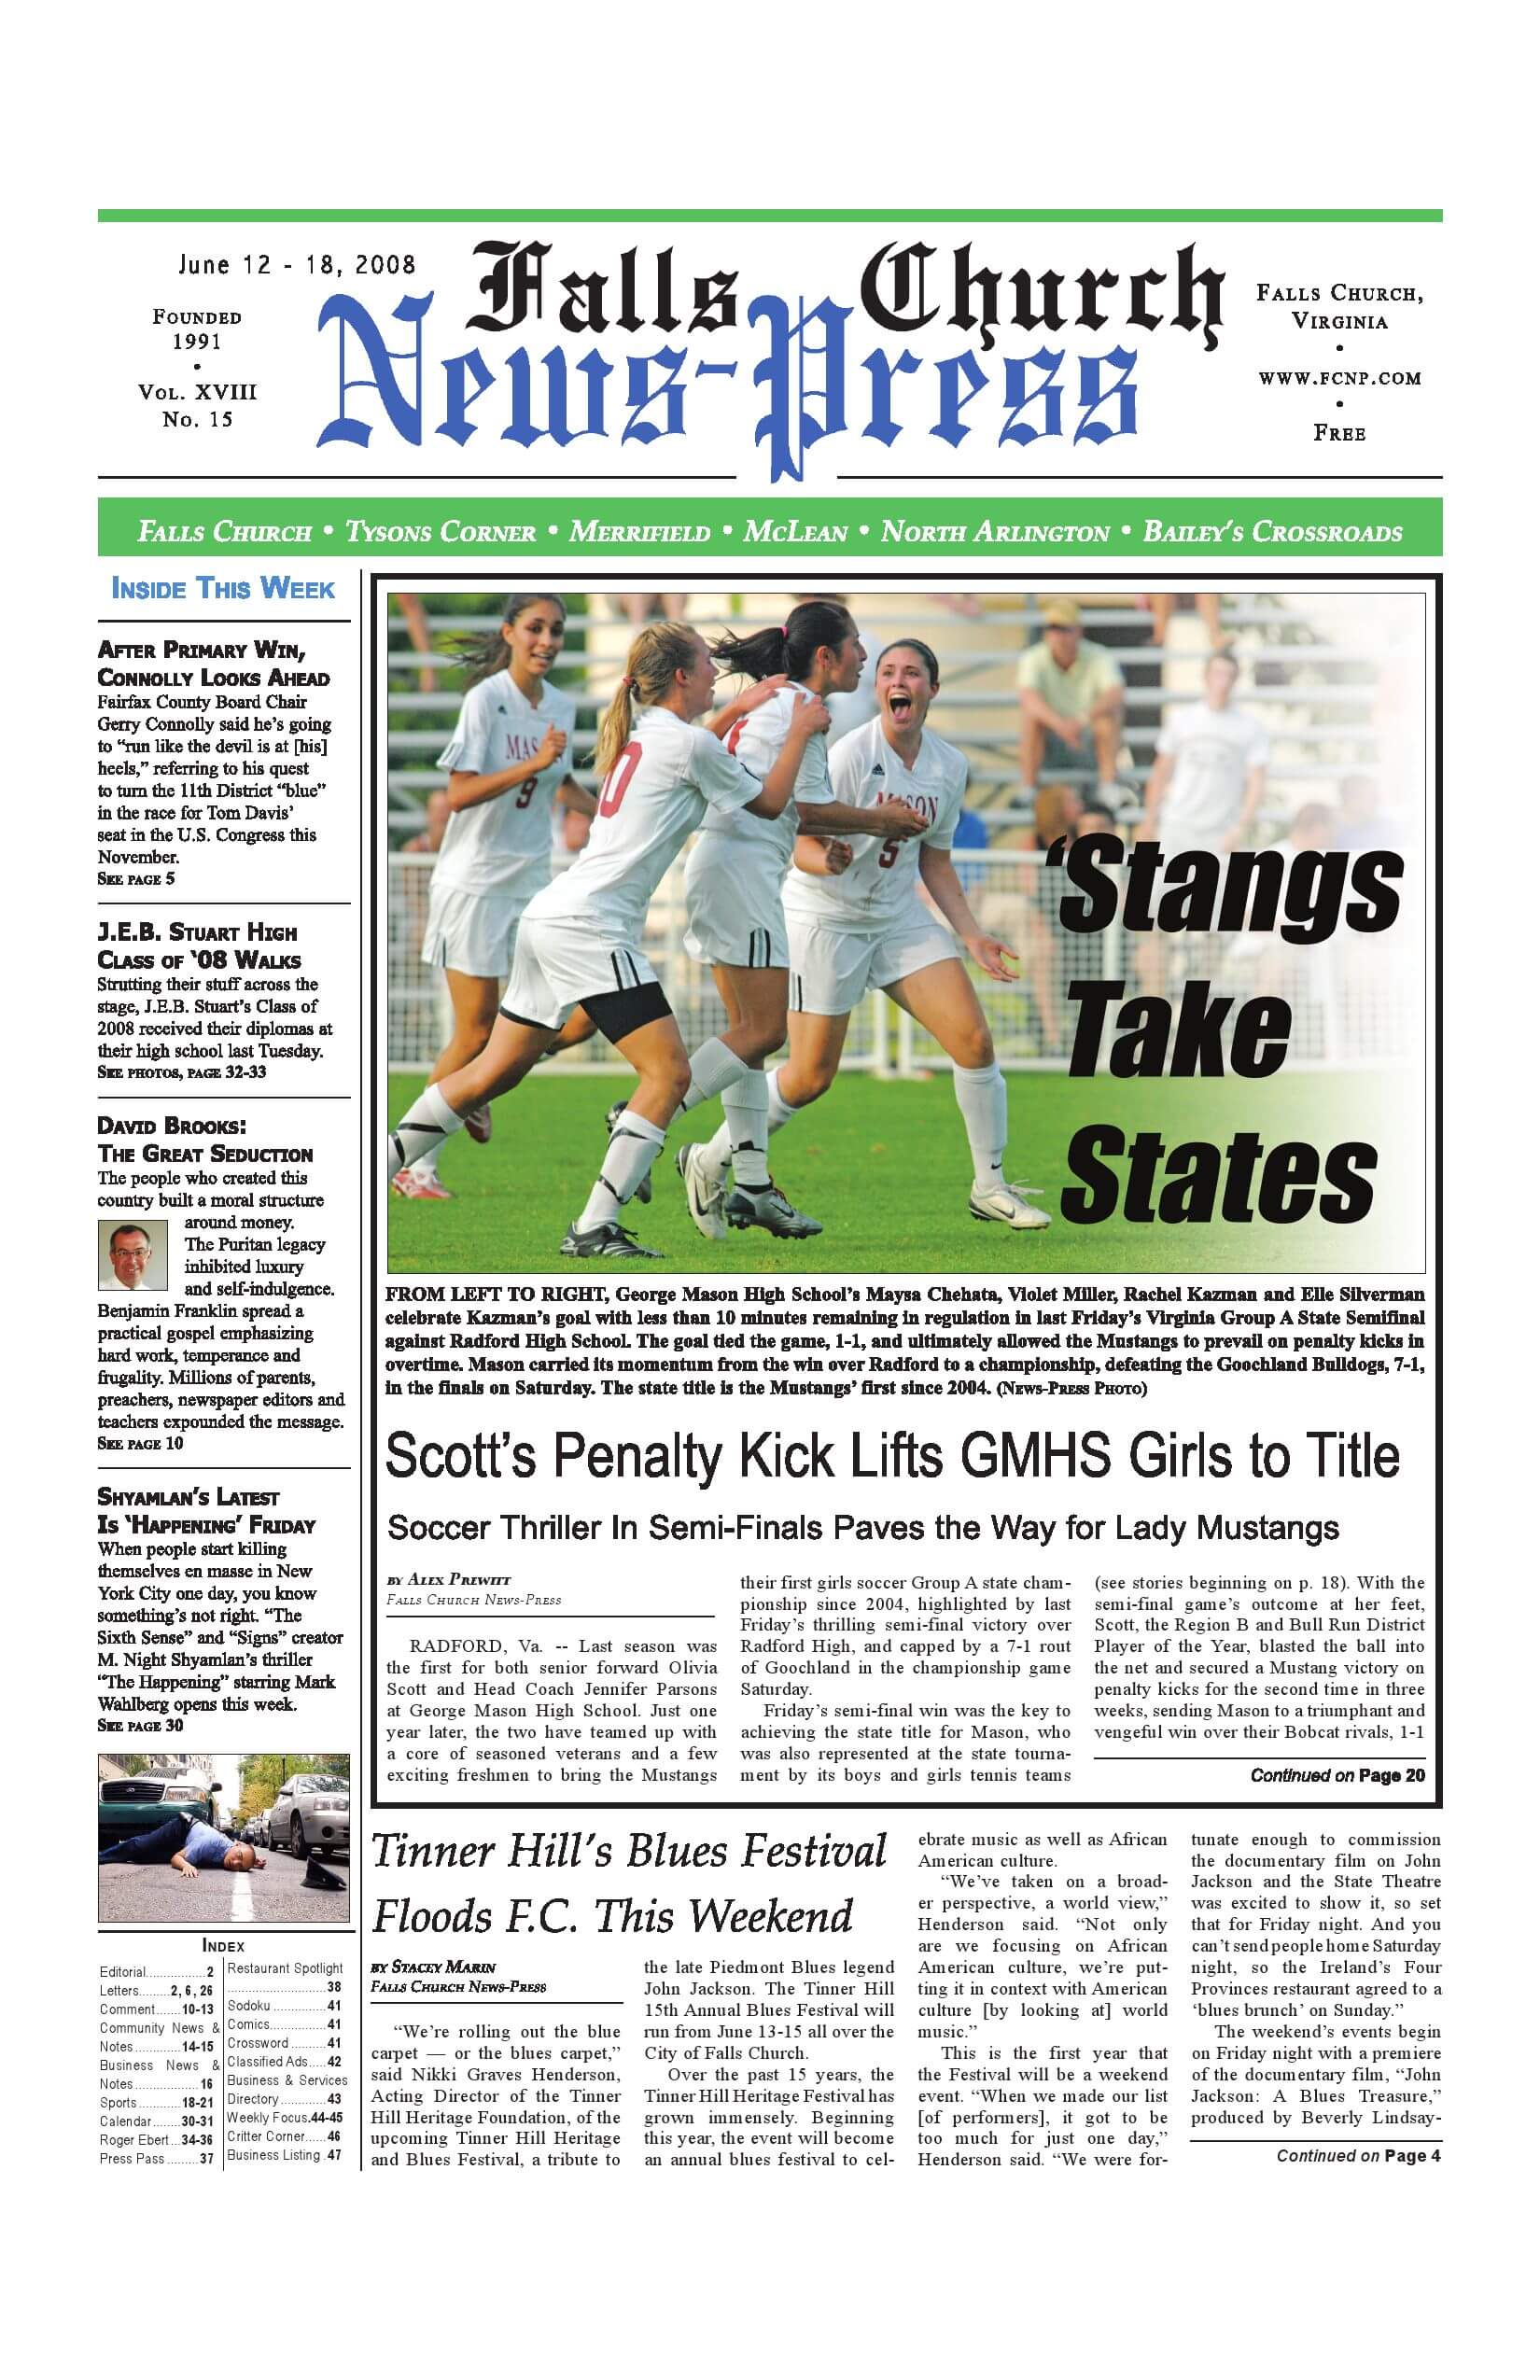 Virginia Newspapers 23 Falls Church News Press